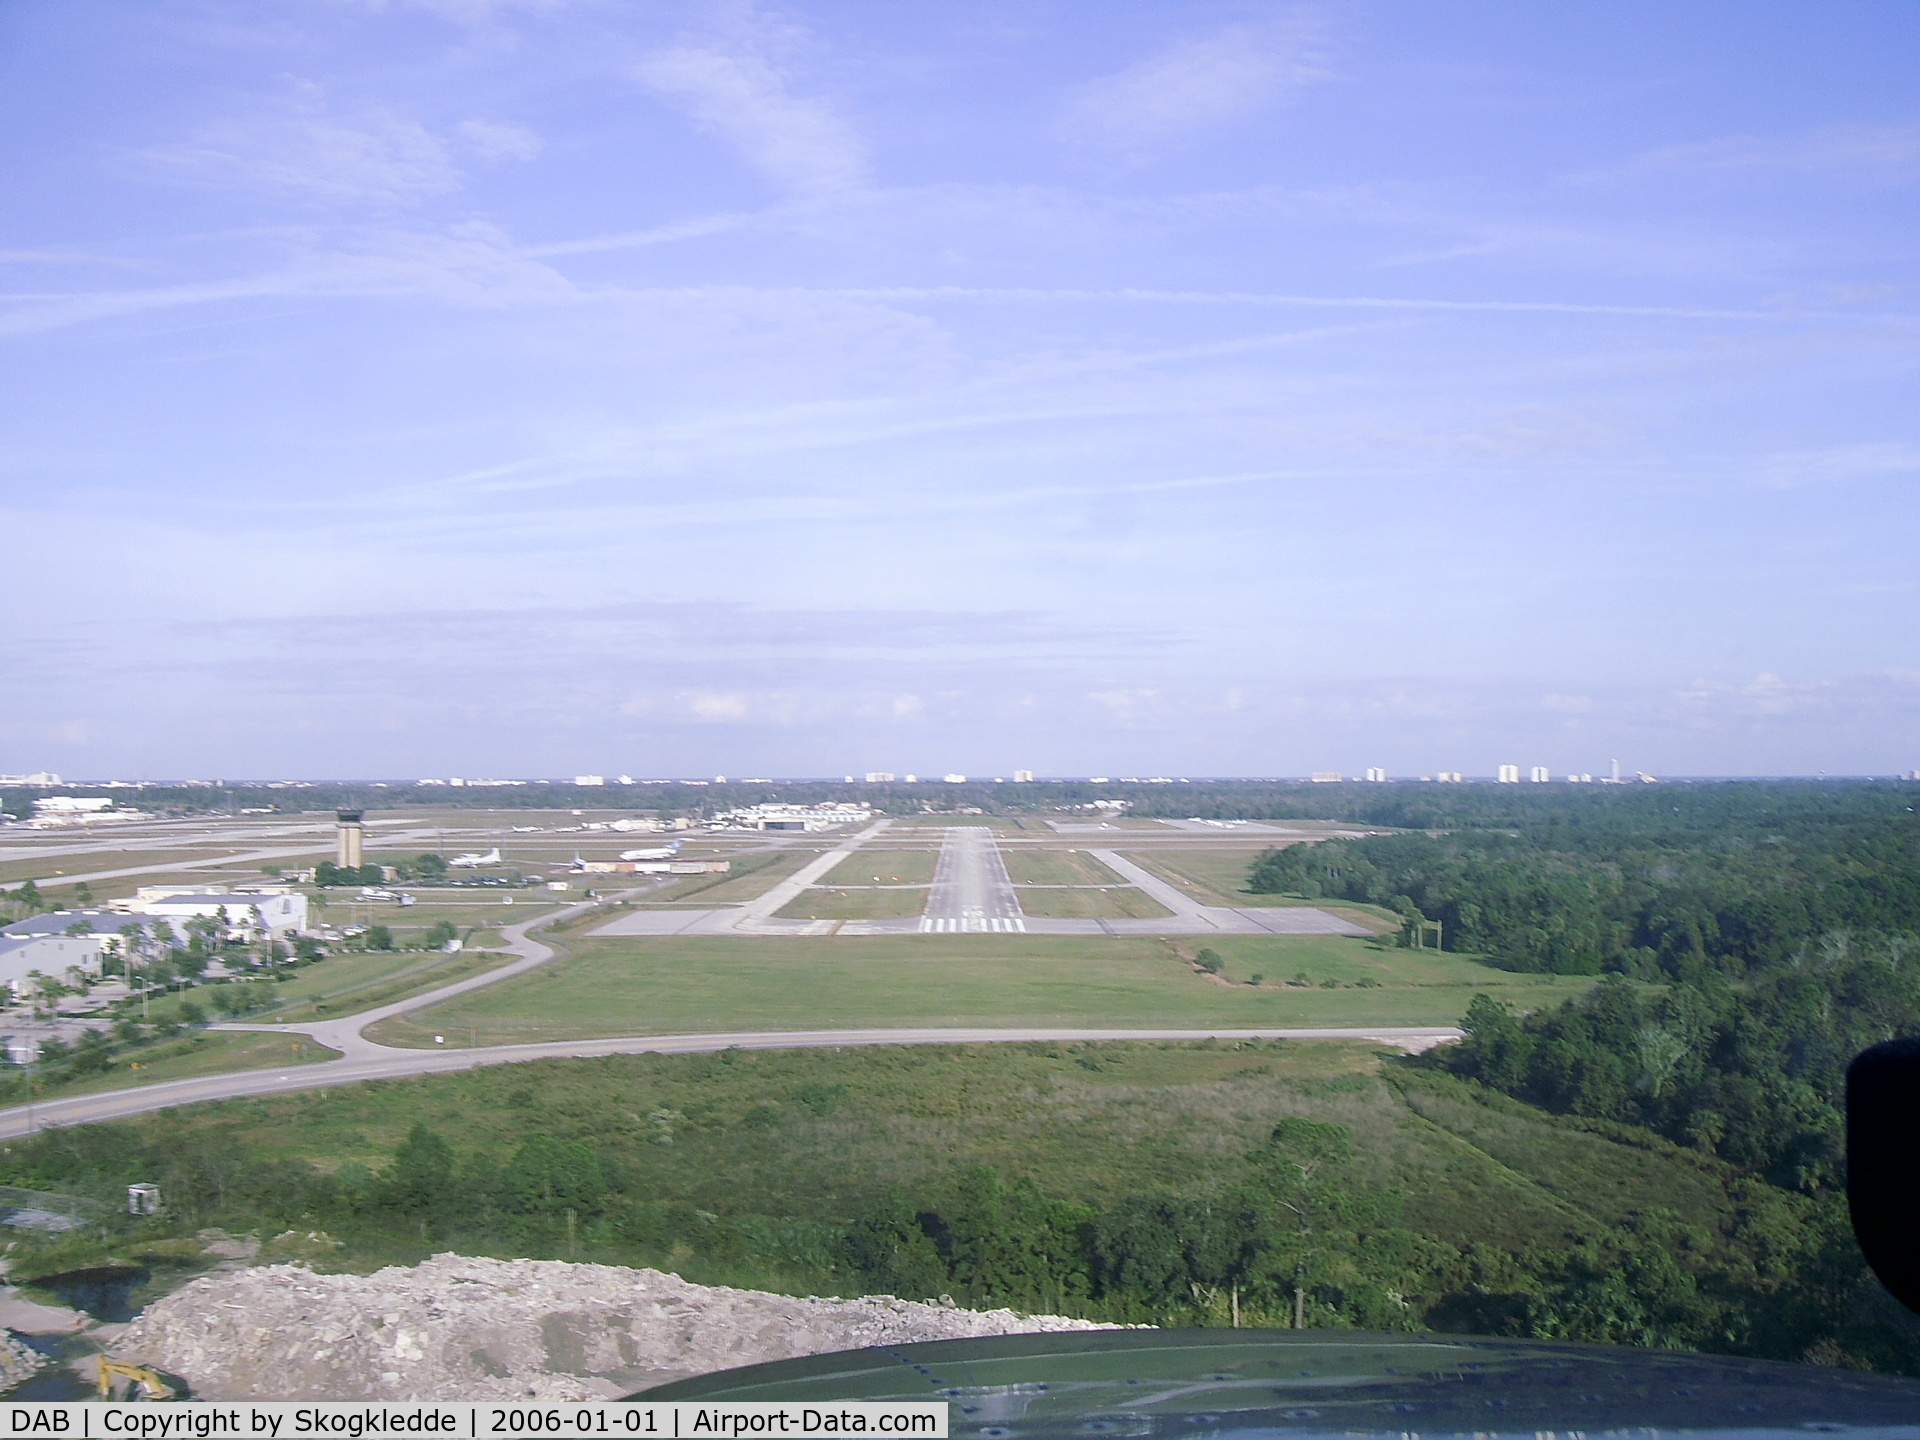 Daytona Beach International Airport (DAB) - On approach to Daytona after a long flight from MTH